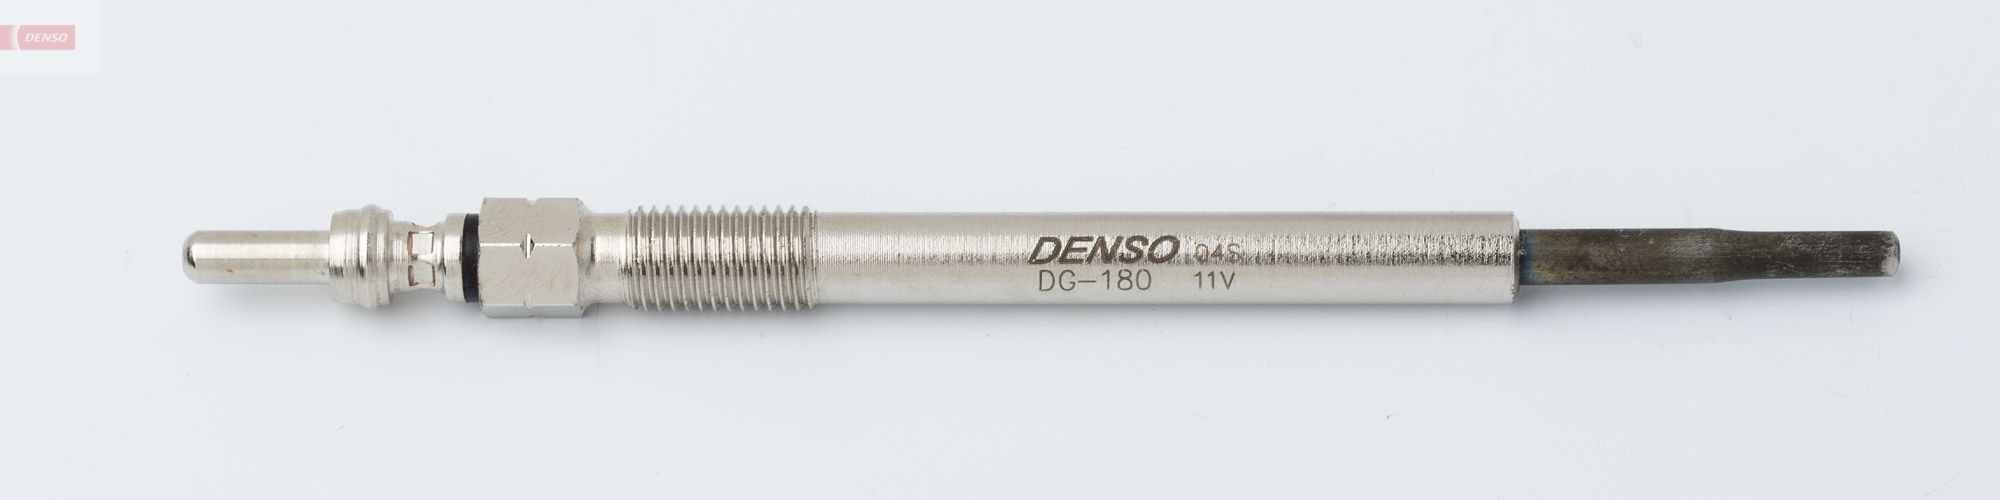 DENSO DG-180 MAZDA 2 2004 Diesel glow plugs